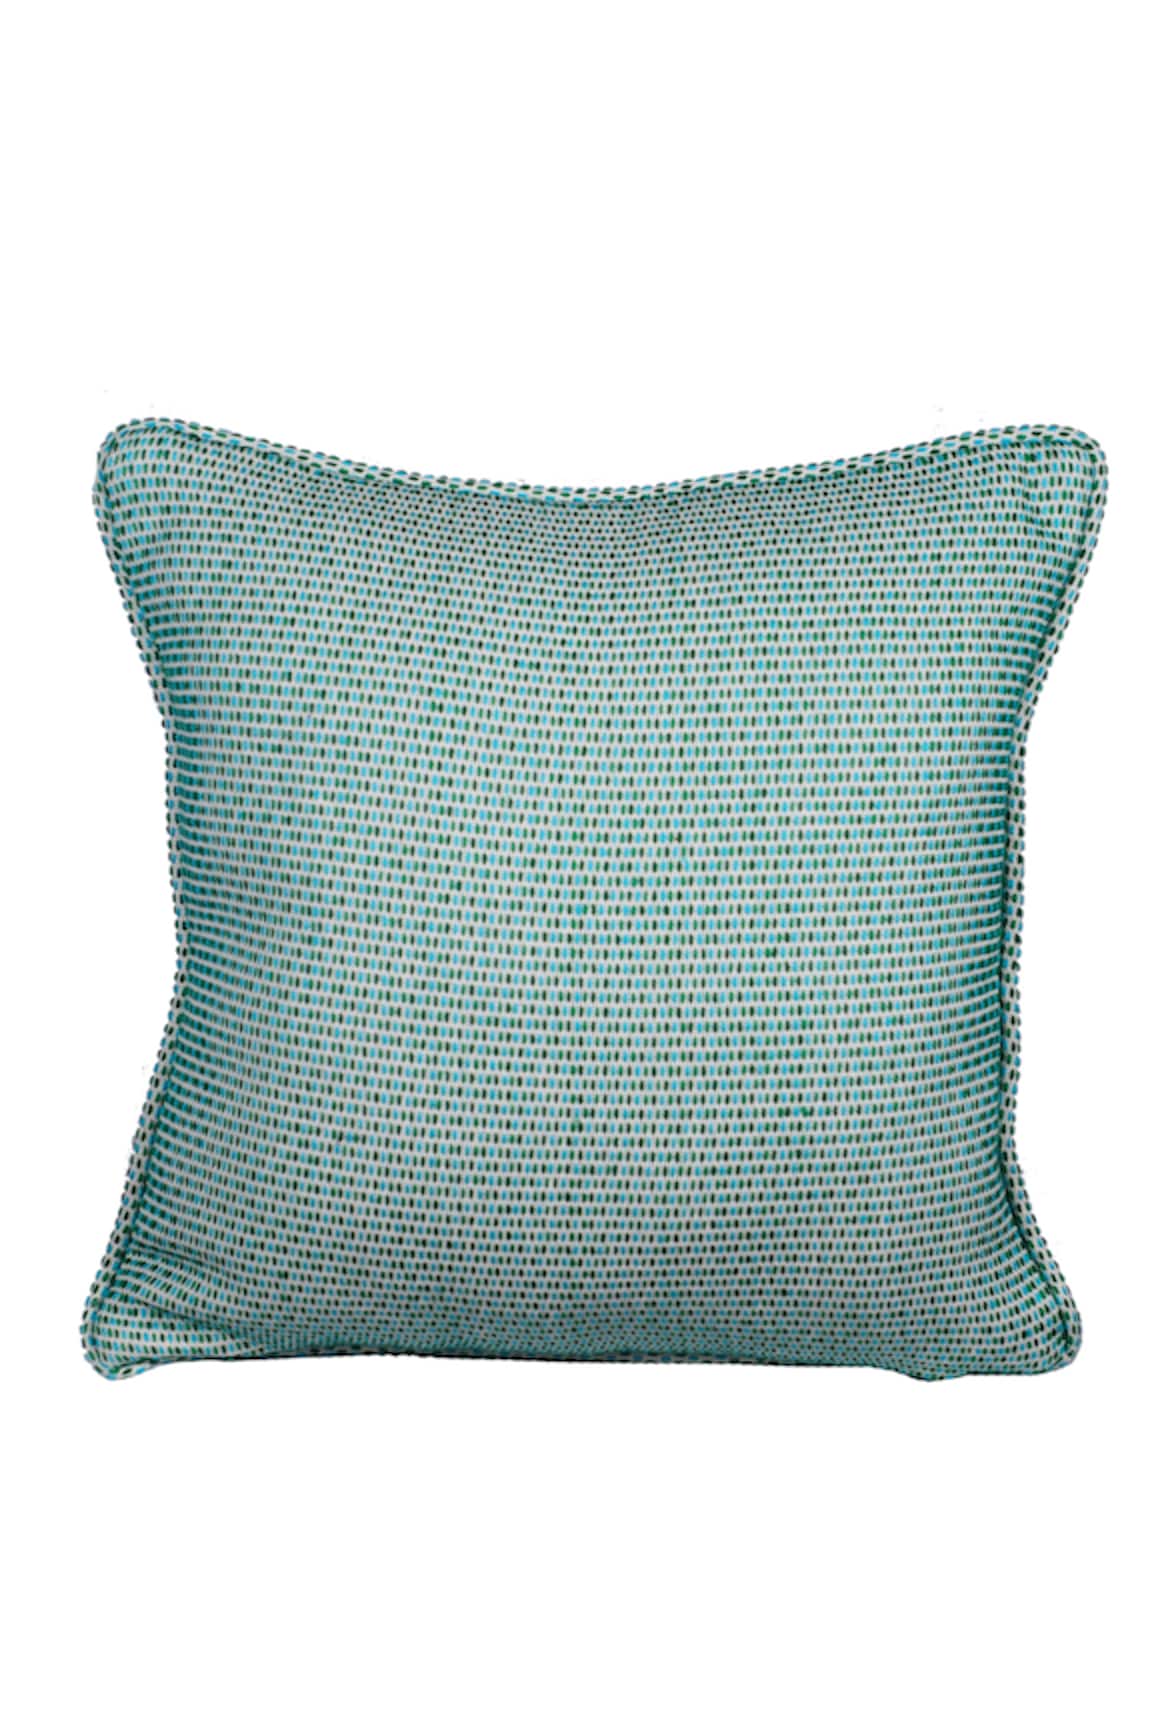 La Paloma Geometric Pattern Double Sided Square Cushion Cover